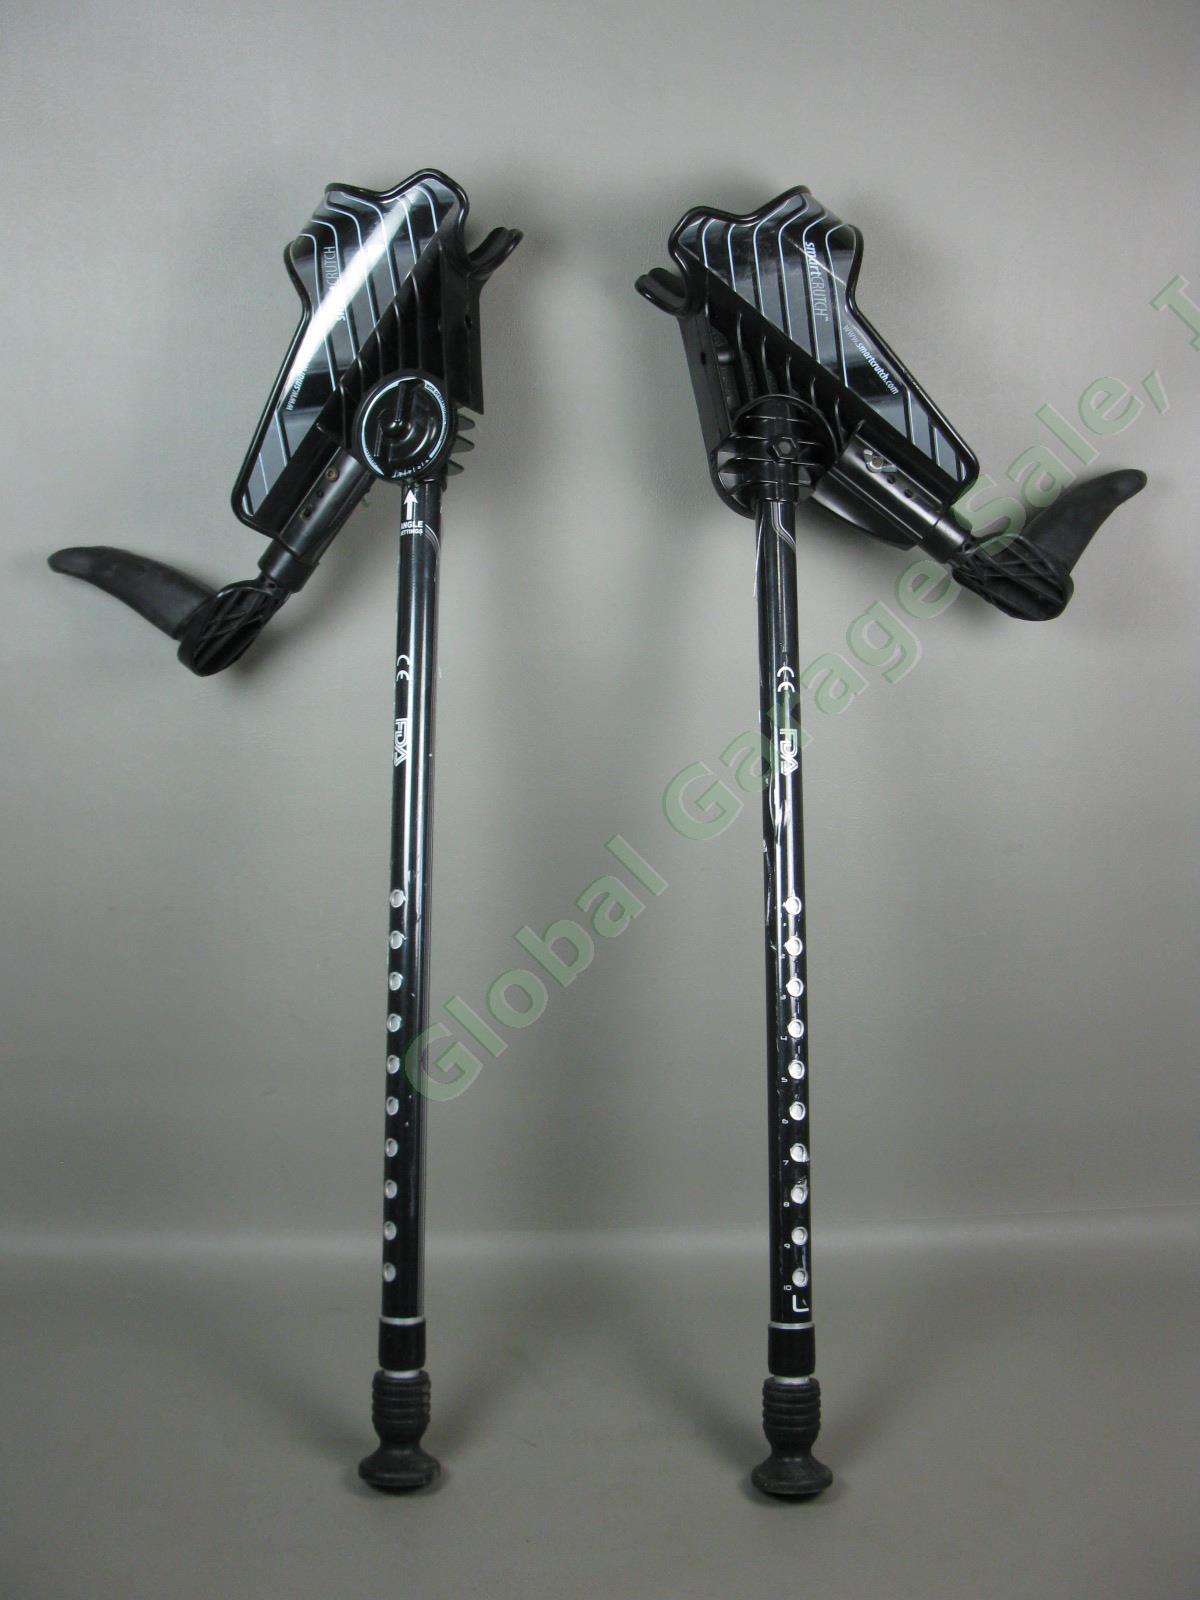 2 Black SmartCrutch Adjustable Telescopic Forearm Walking Crutches Pair Set Lot 1